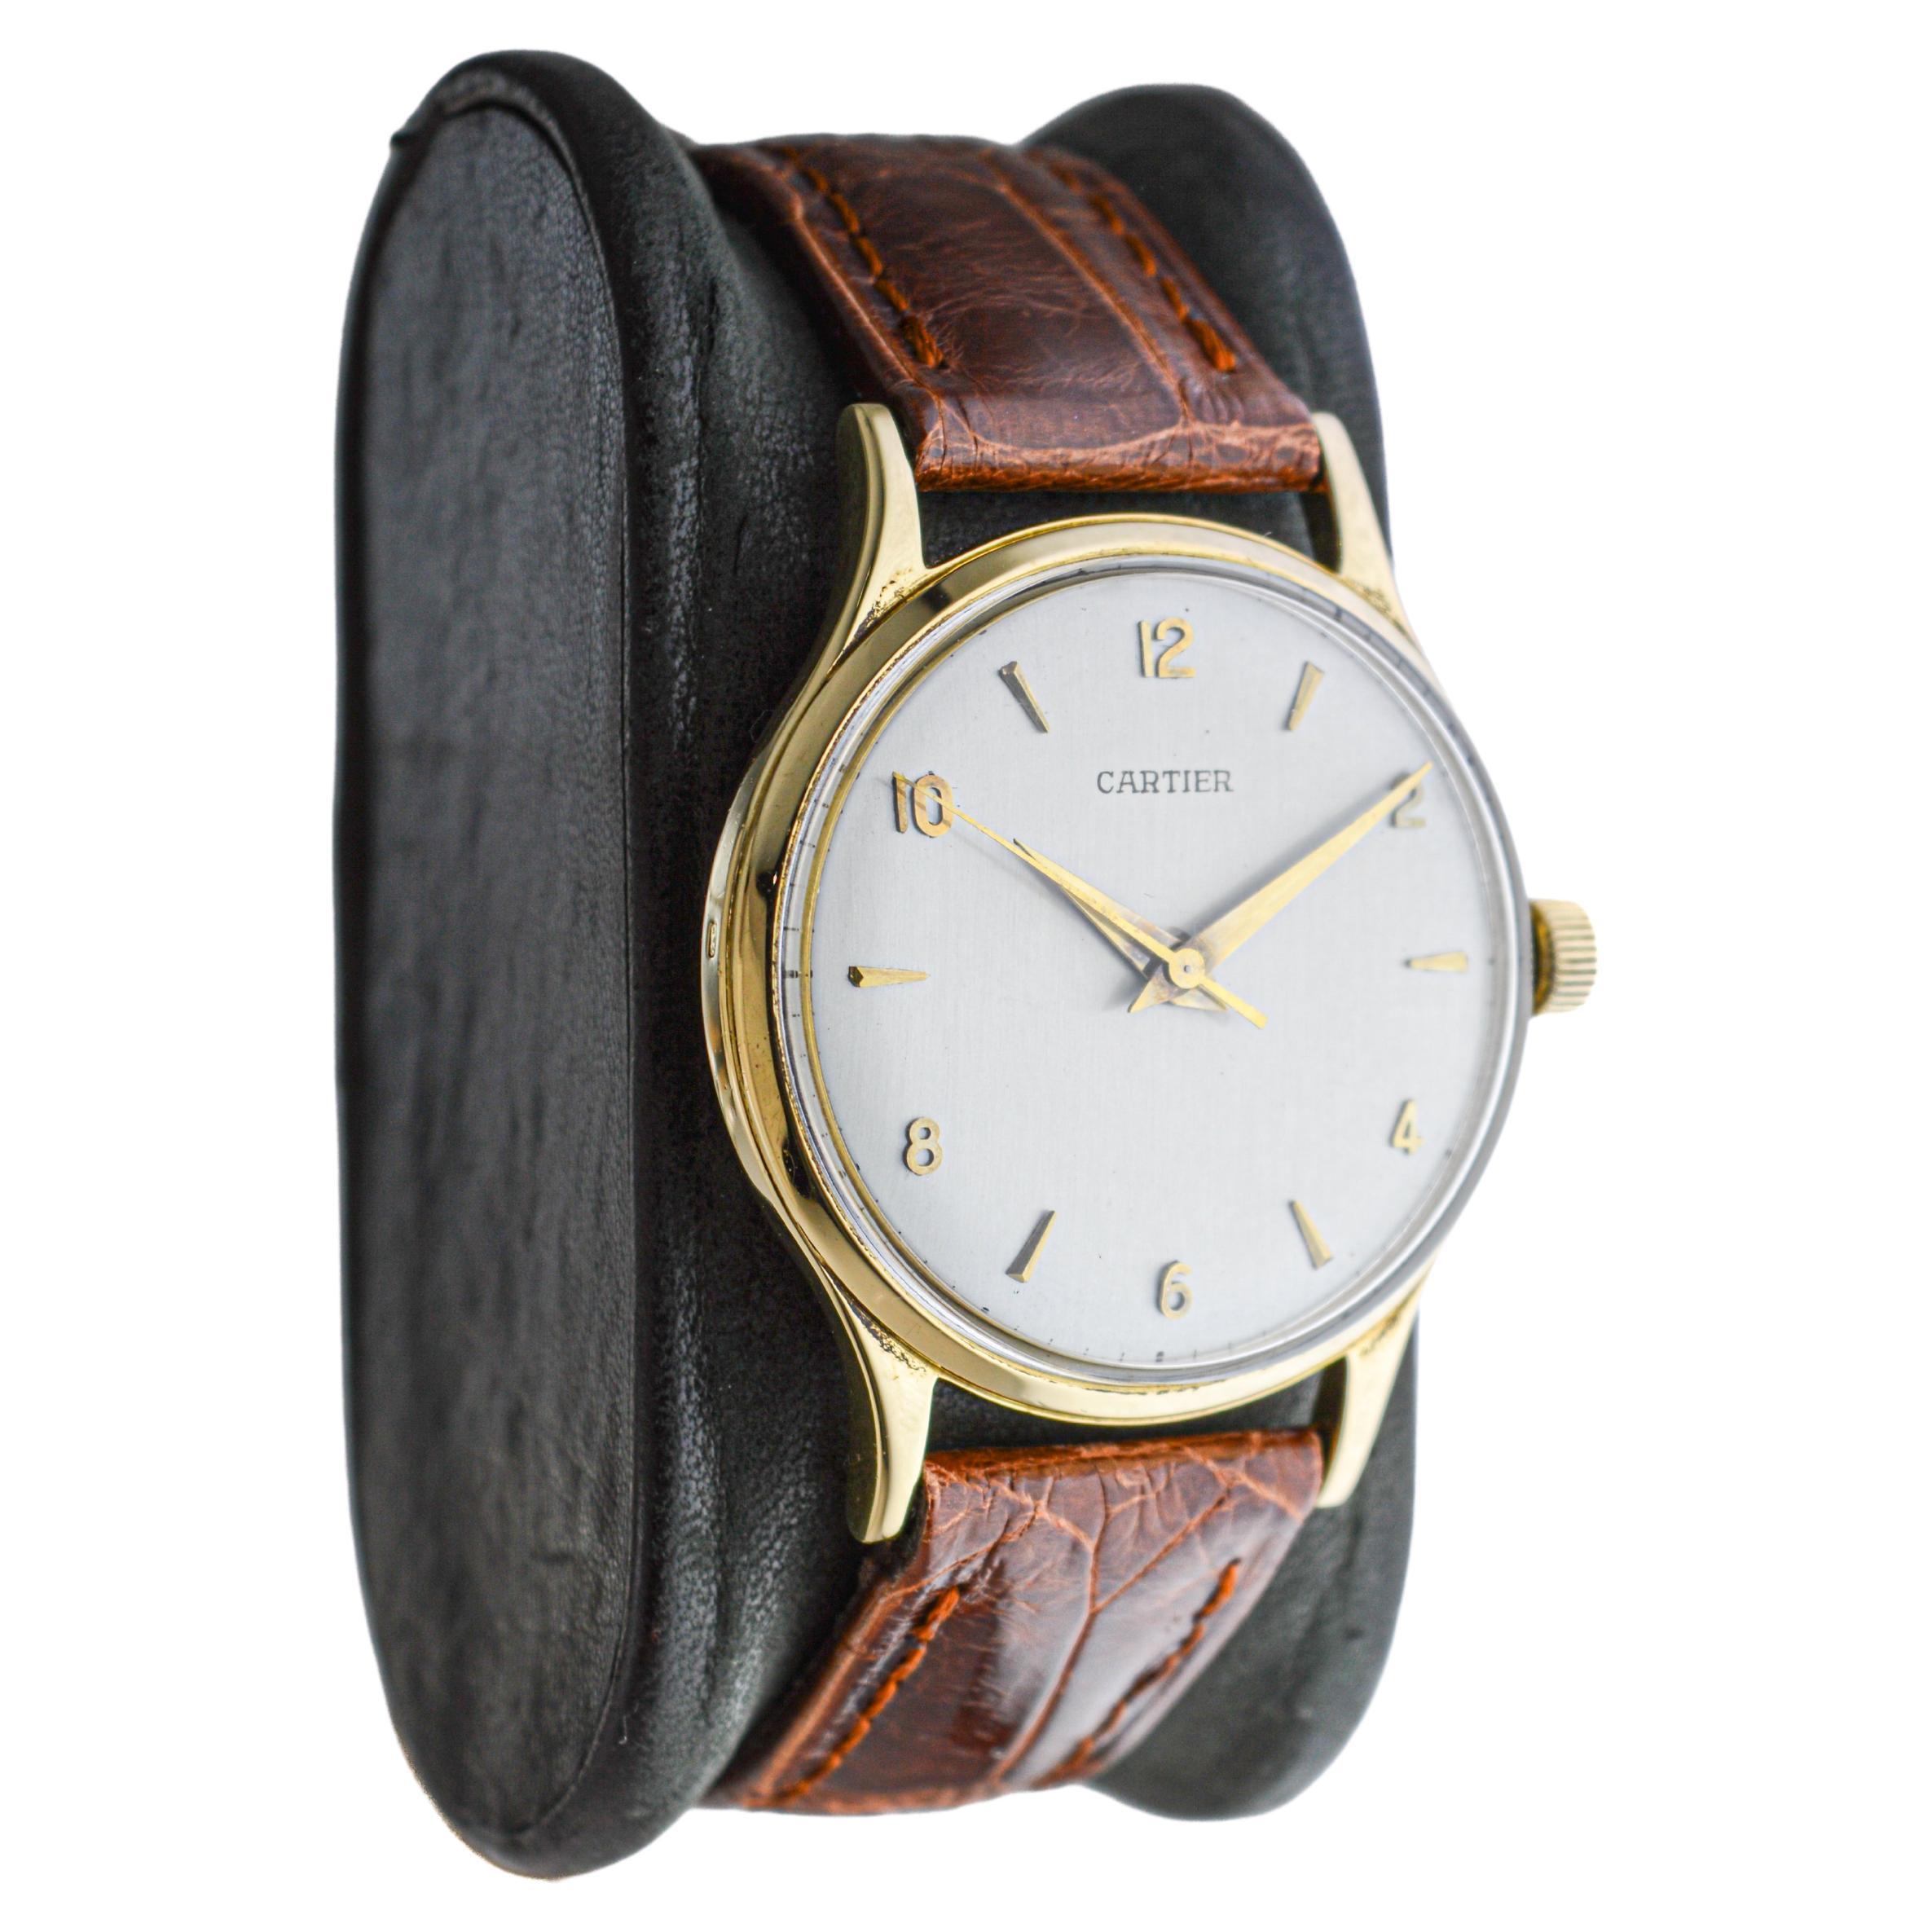 FABRIK / HAUS: European Watch & Clock Co / Cartier Paris  
STIL / REFERENZ: Calatrava-Stil 
METALL: 18Kt. Gelbgold
CIRCA: 1950er Jahre
UHRWERK / KALIBER: 17 Jewels / Sweep / European Watch & Clock Co. 
Kaliber P800/C
ZIFFERBLATT / ZEIGER: